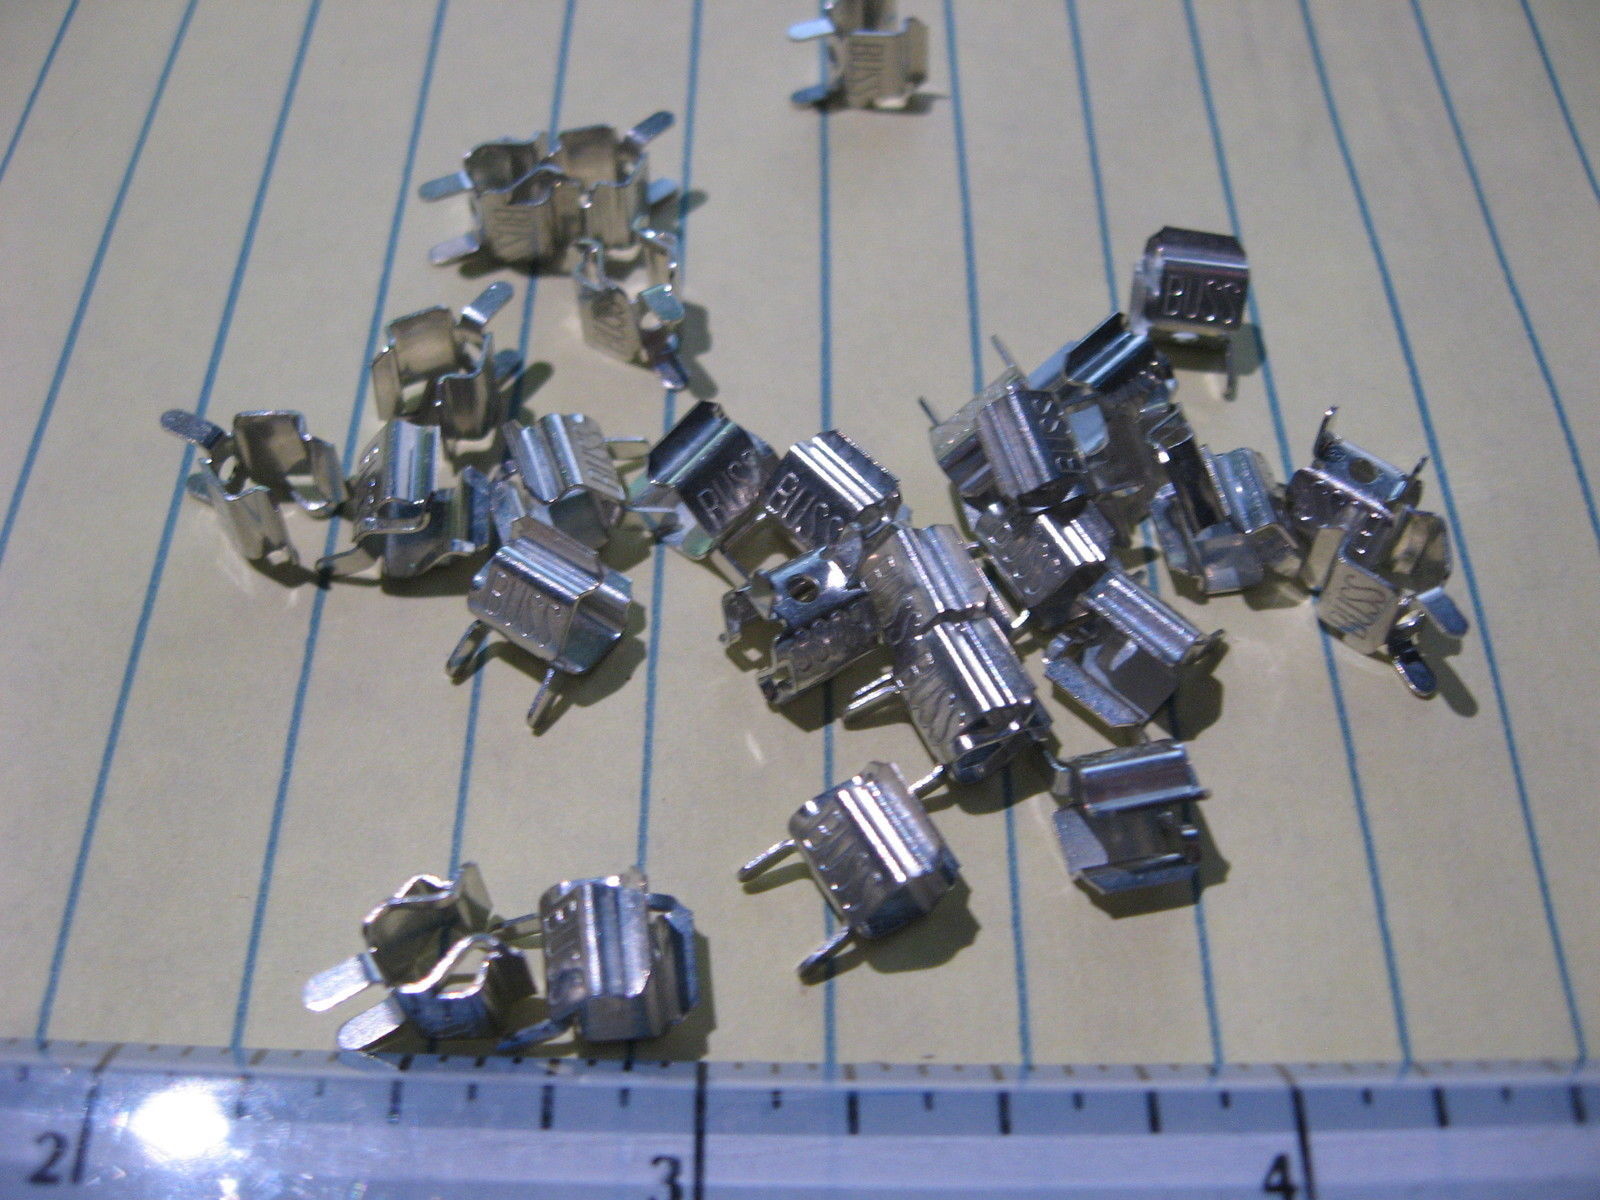 Lot of 100 Fuse Clip Cooper Bussmann 5mm Through Hole PCB Mount BK/A3399-12 NOS - $12.83